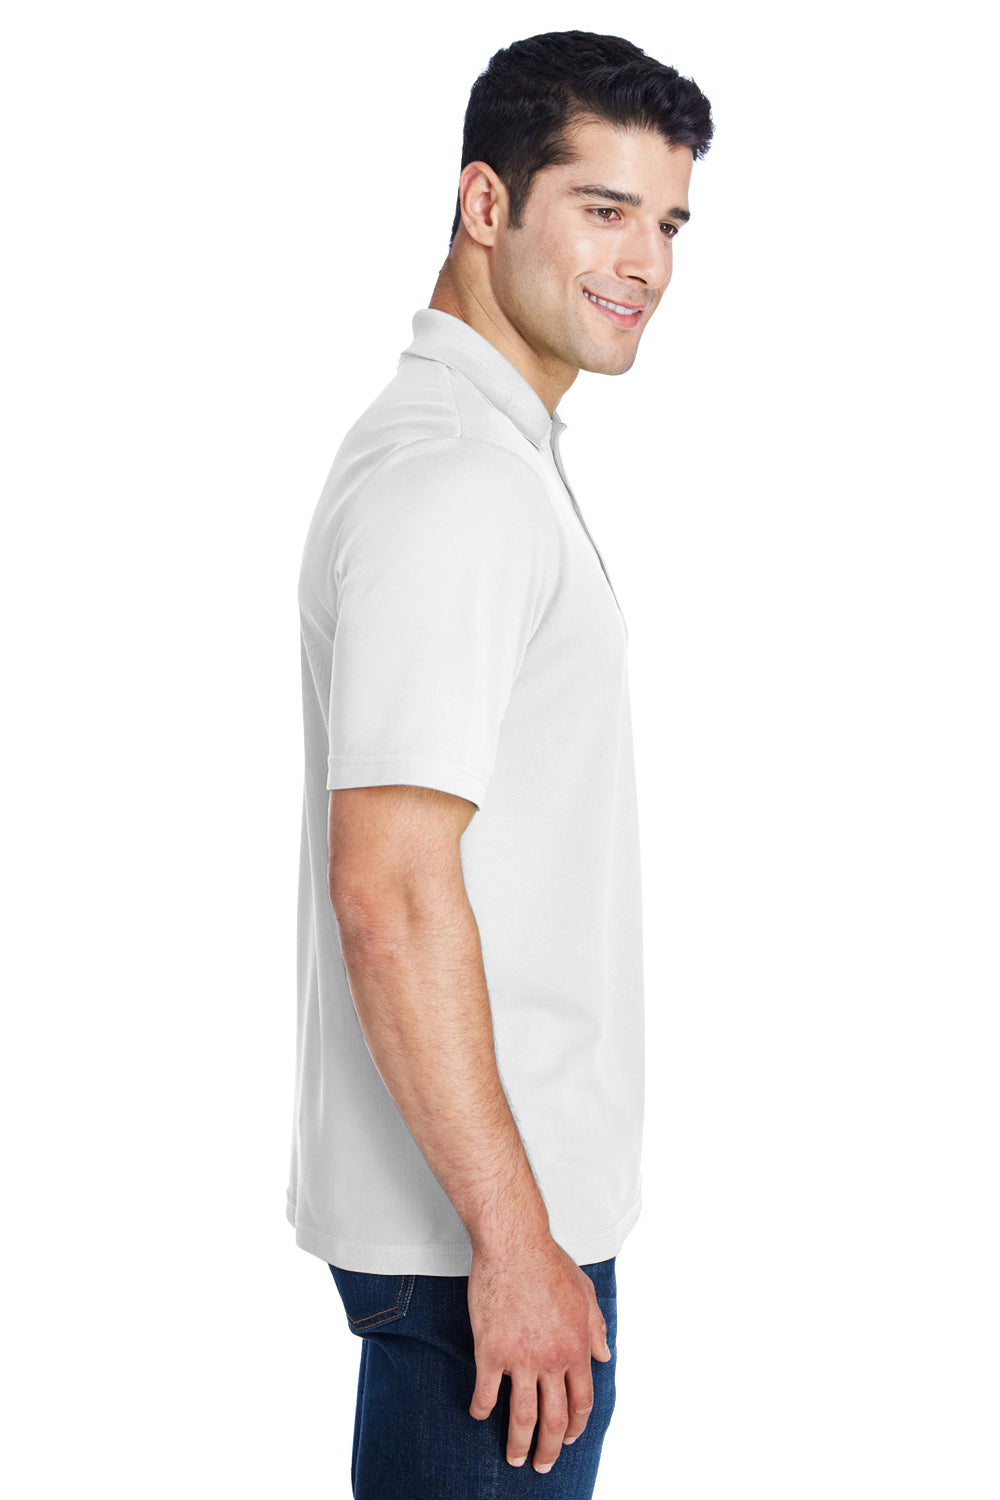 Core 365 88181 Mens Origin Performance Moisture Wicking Short Sleeve Polo Shirt White Side